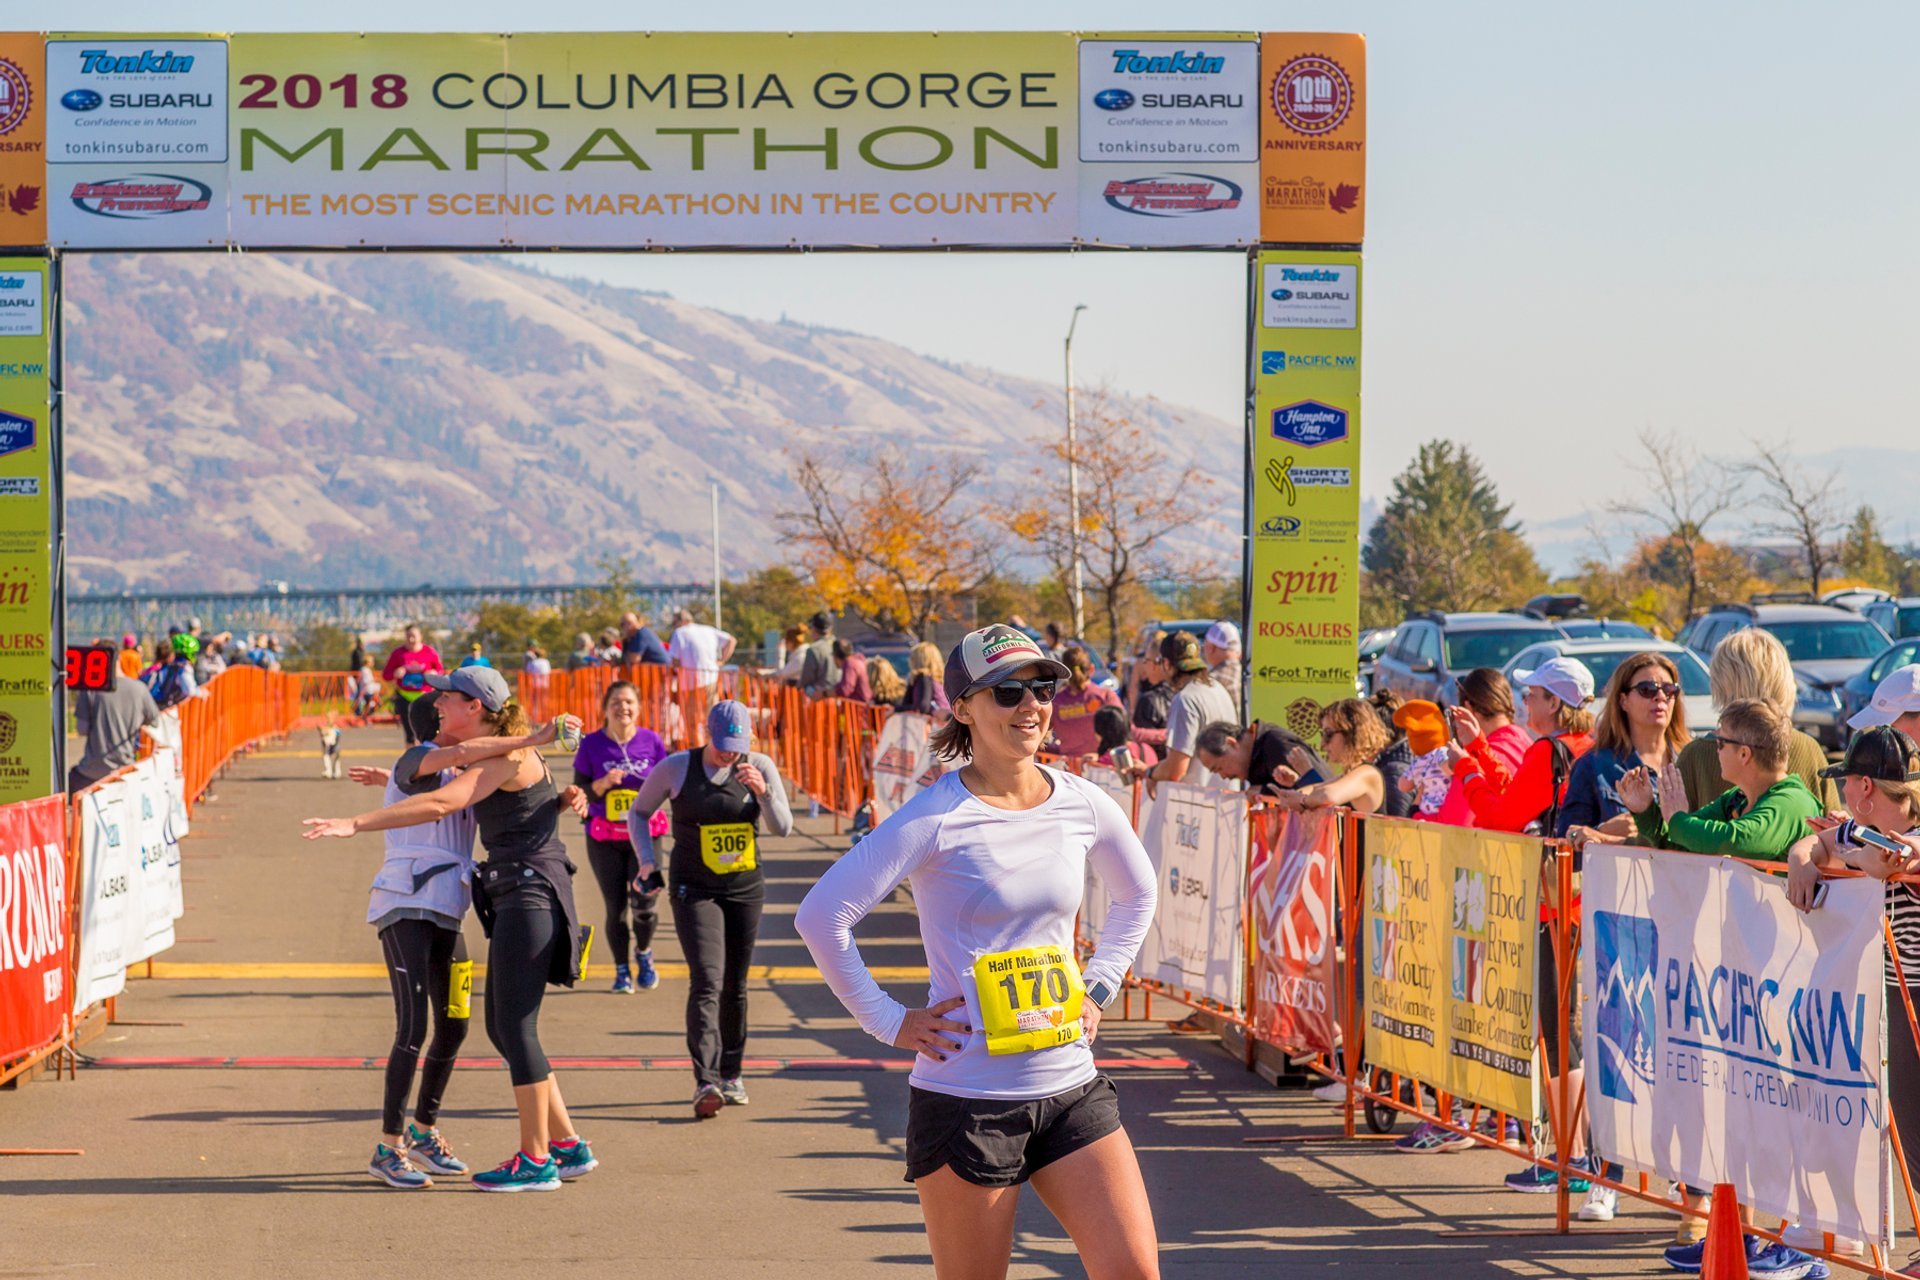 Columbia Gorge Marathon